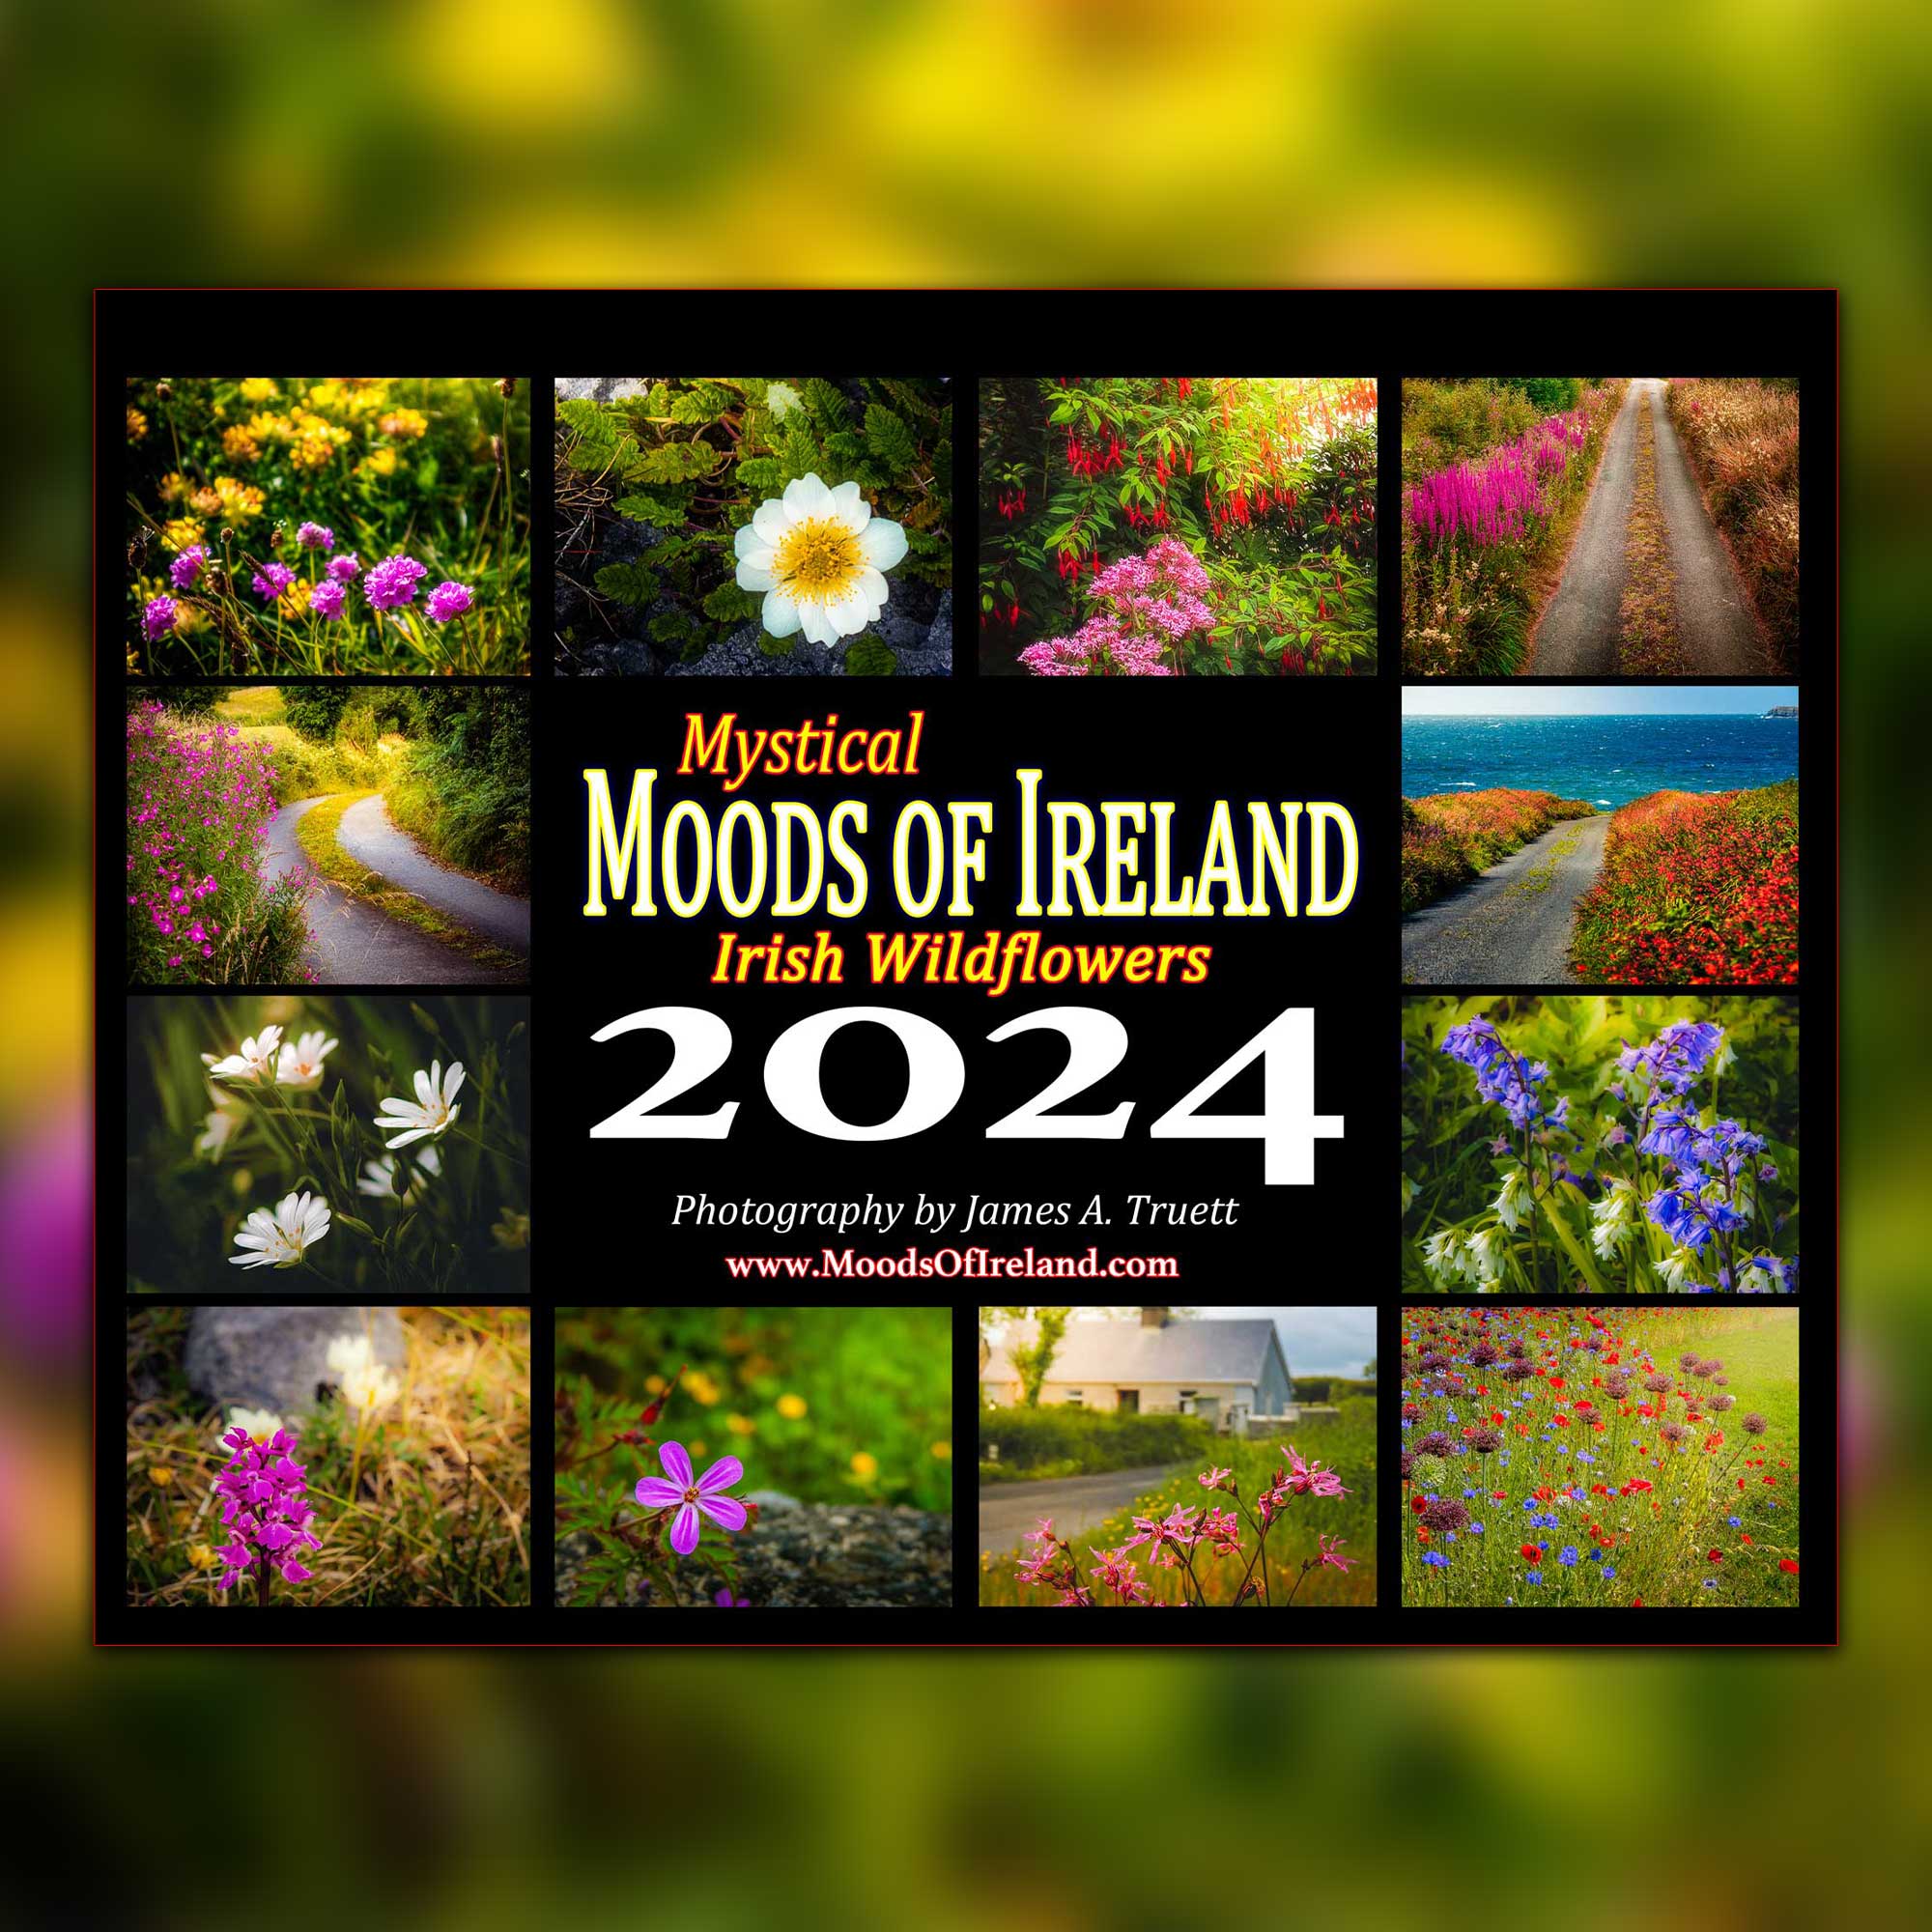 Irish Wildflowers Calendar & 15 oz. Mug Bundle